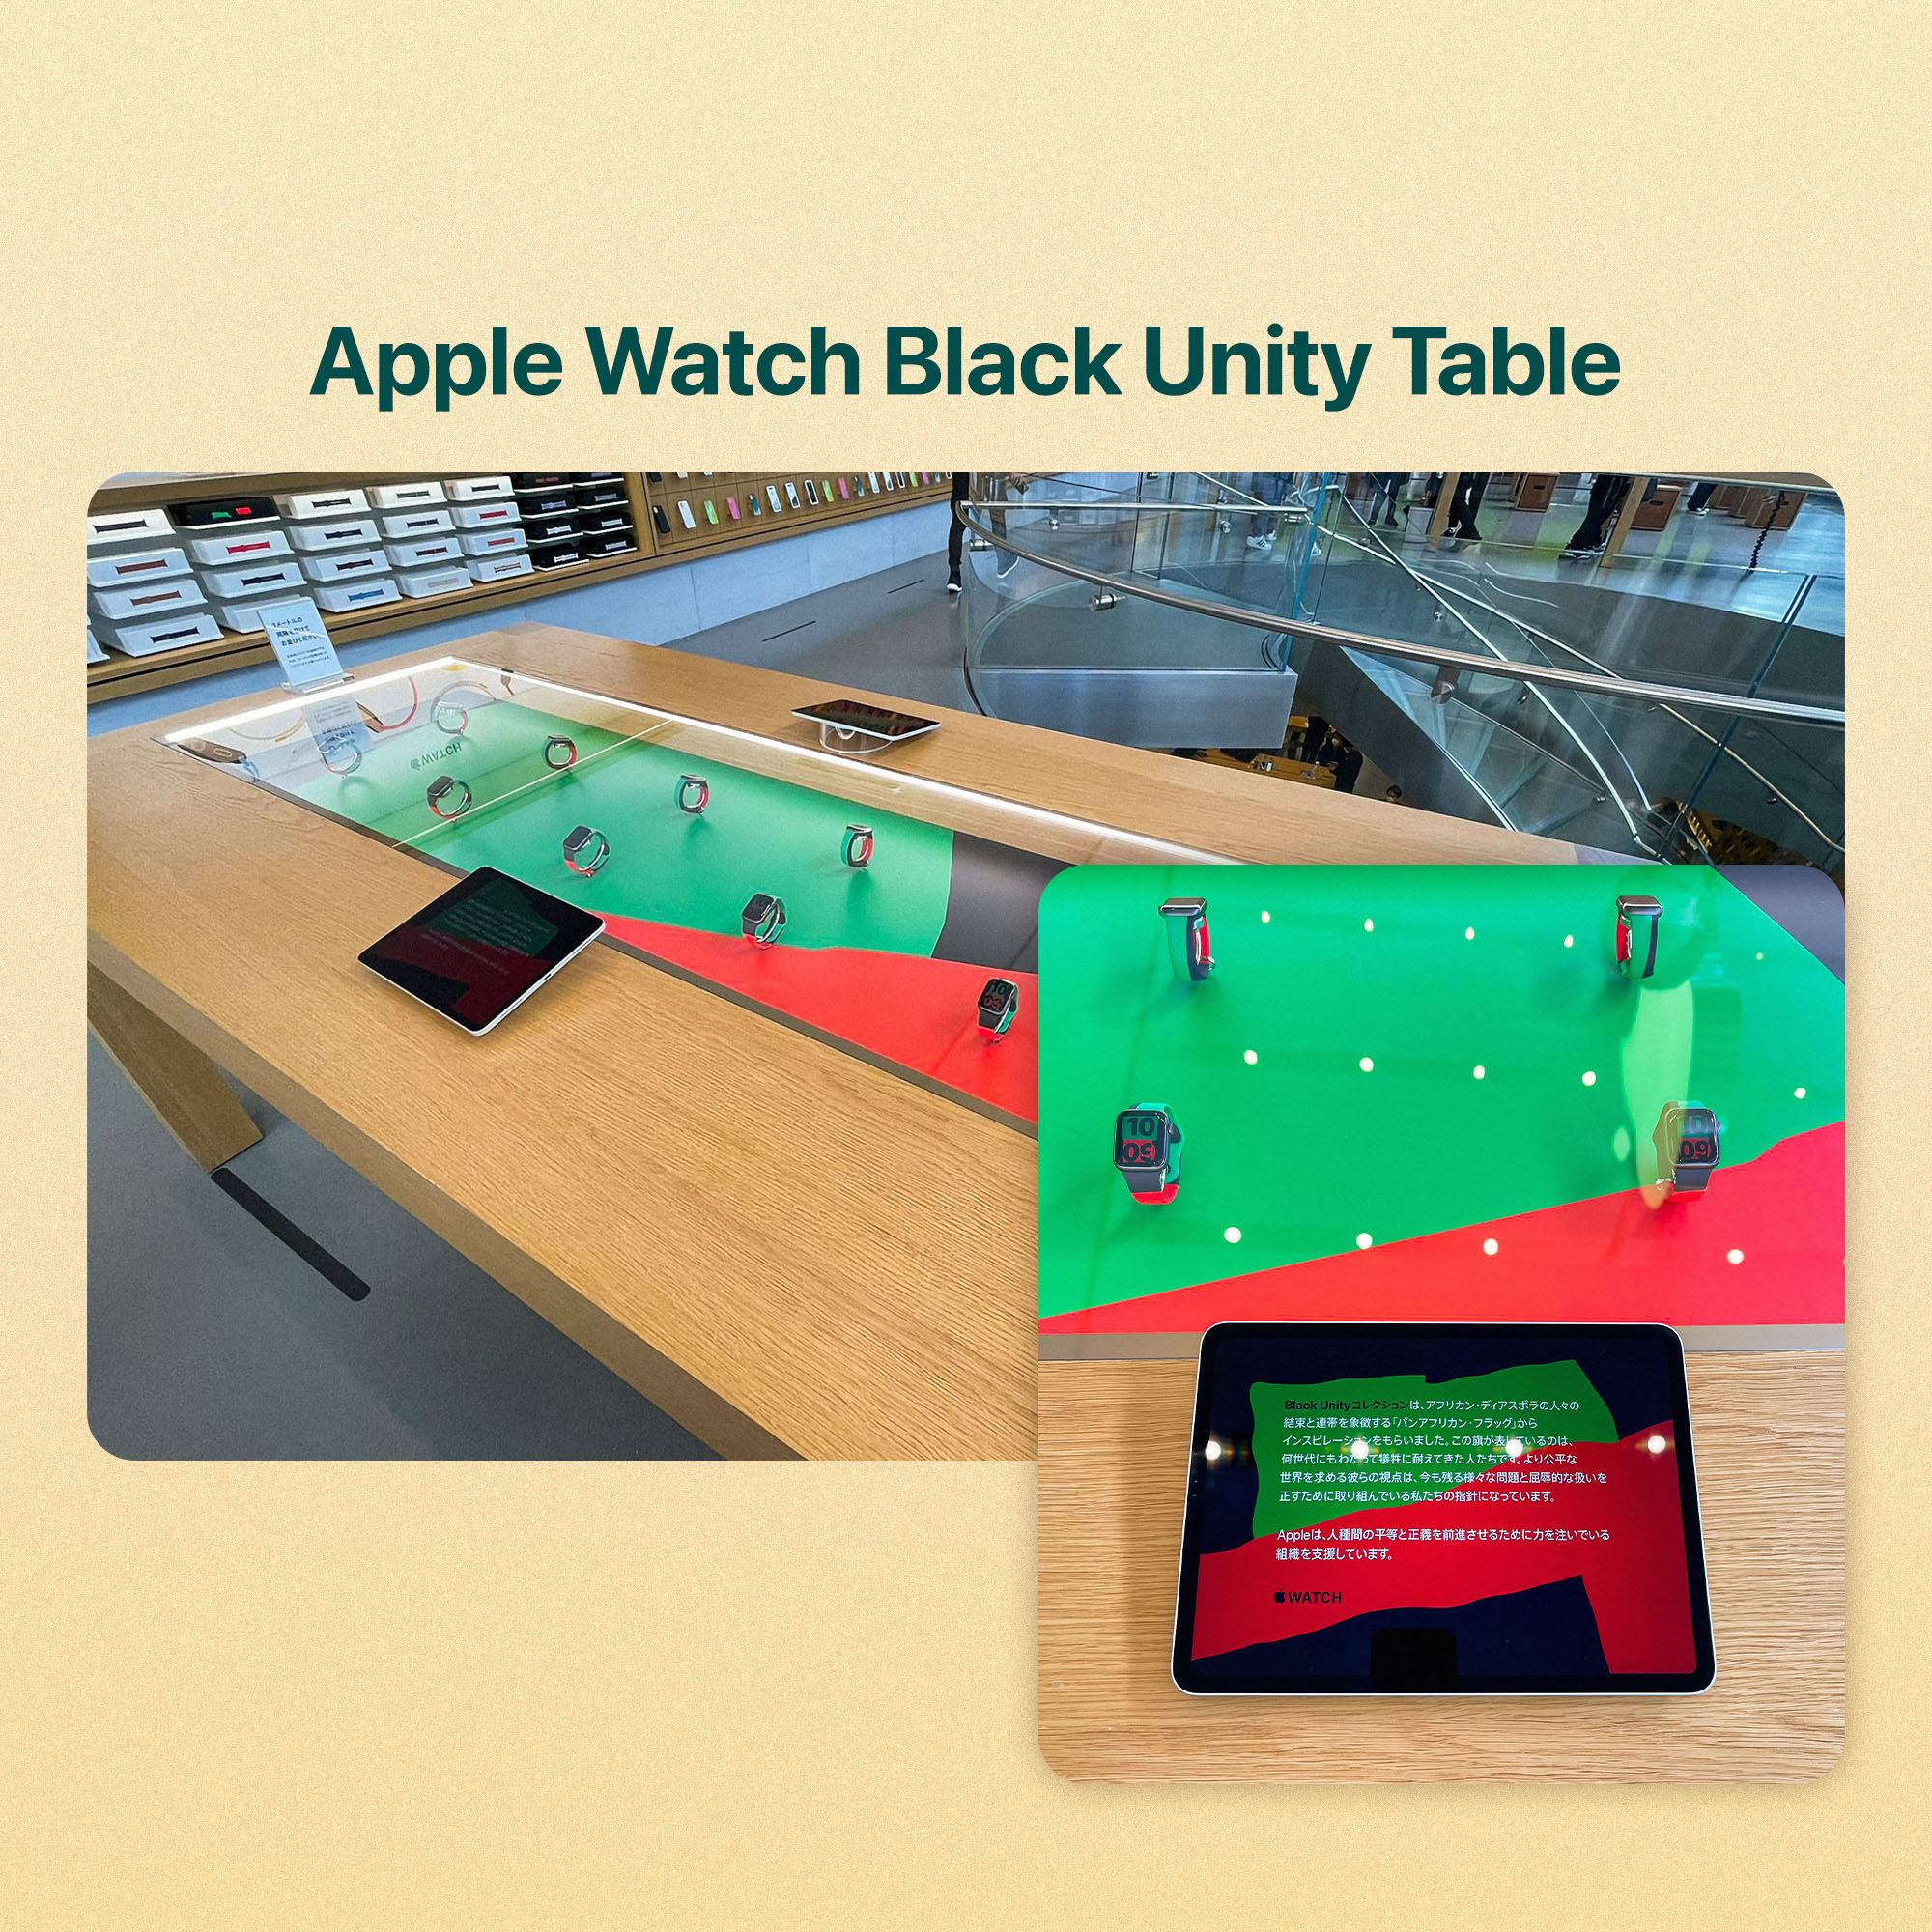 Apple Watch Black Unity Table